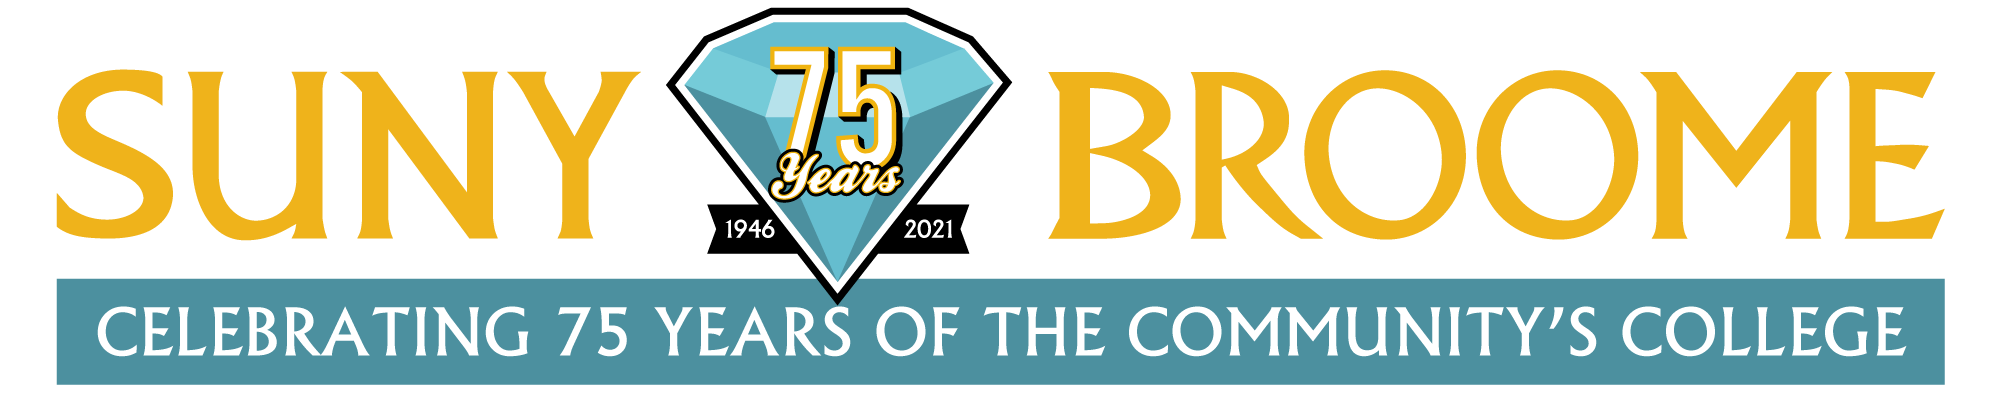 75 anniversary logo with the tagline